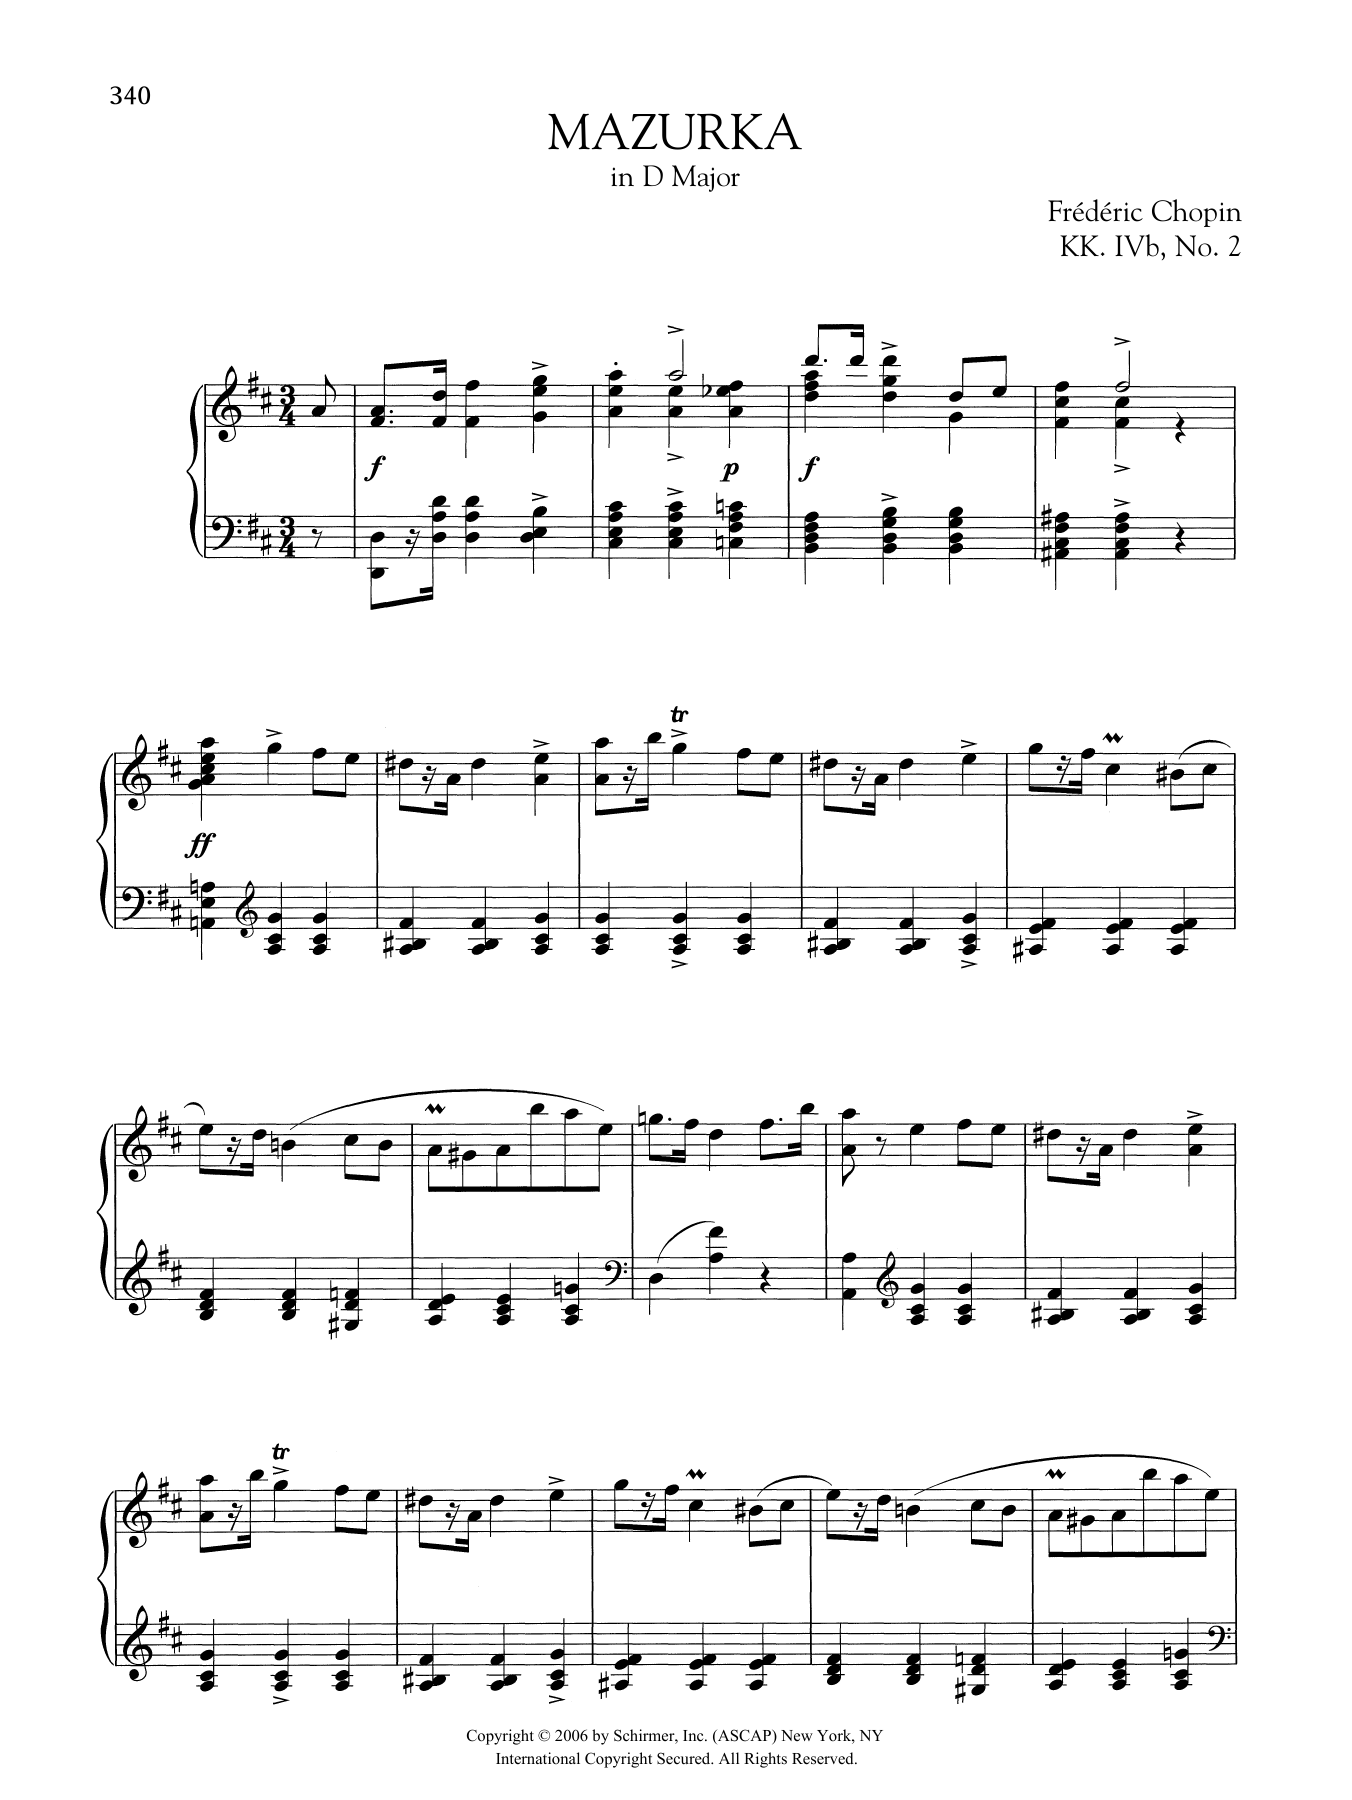 Mazurka in D Major, KK. IVb, No. 2 sheet music